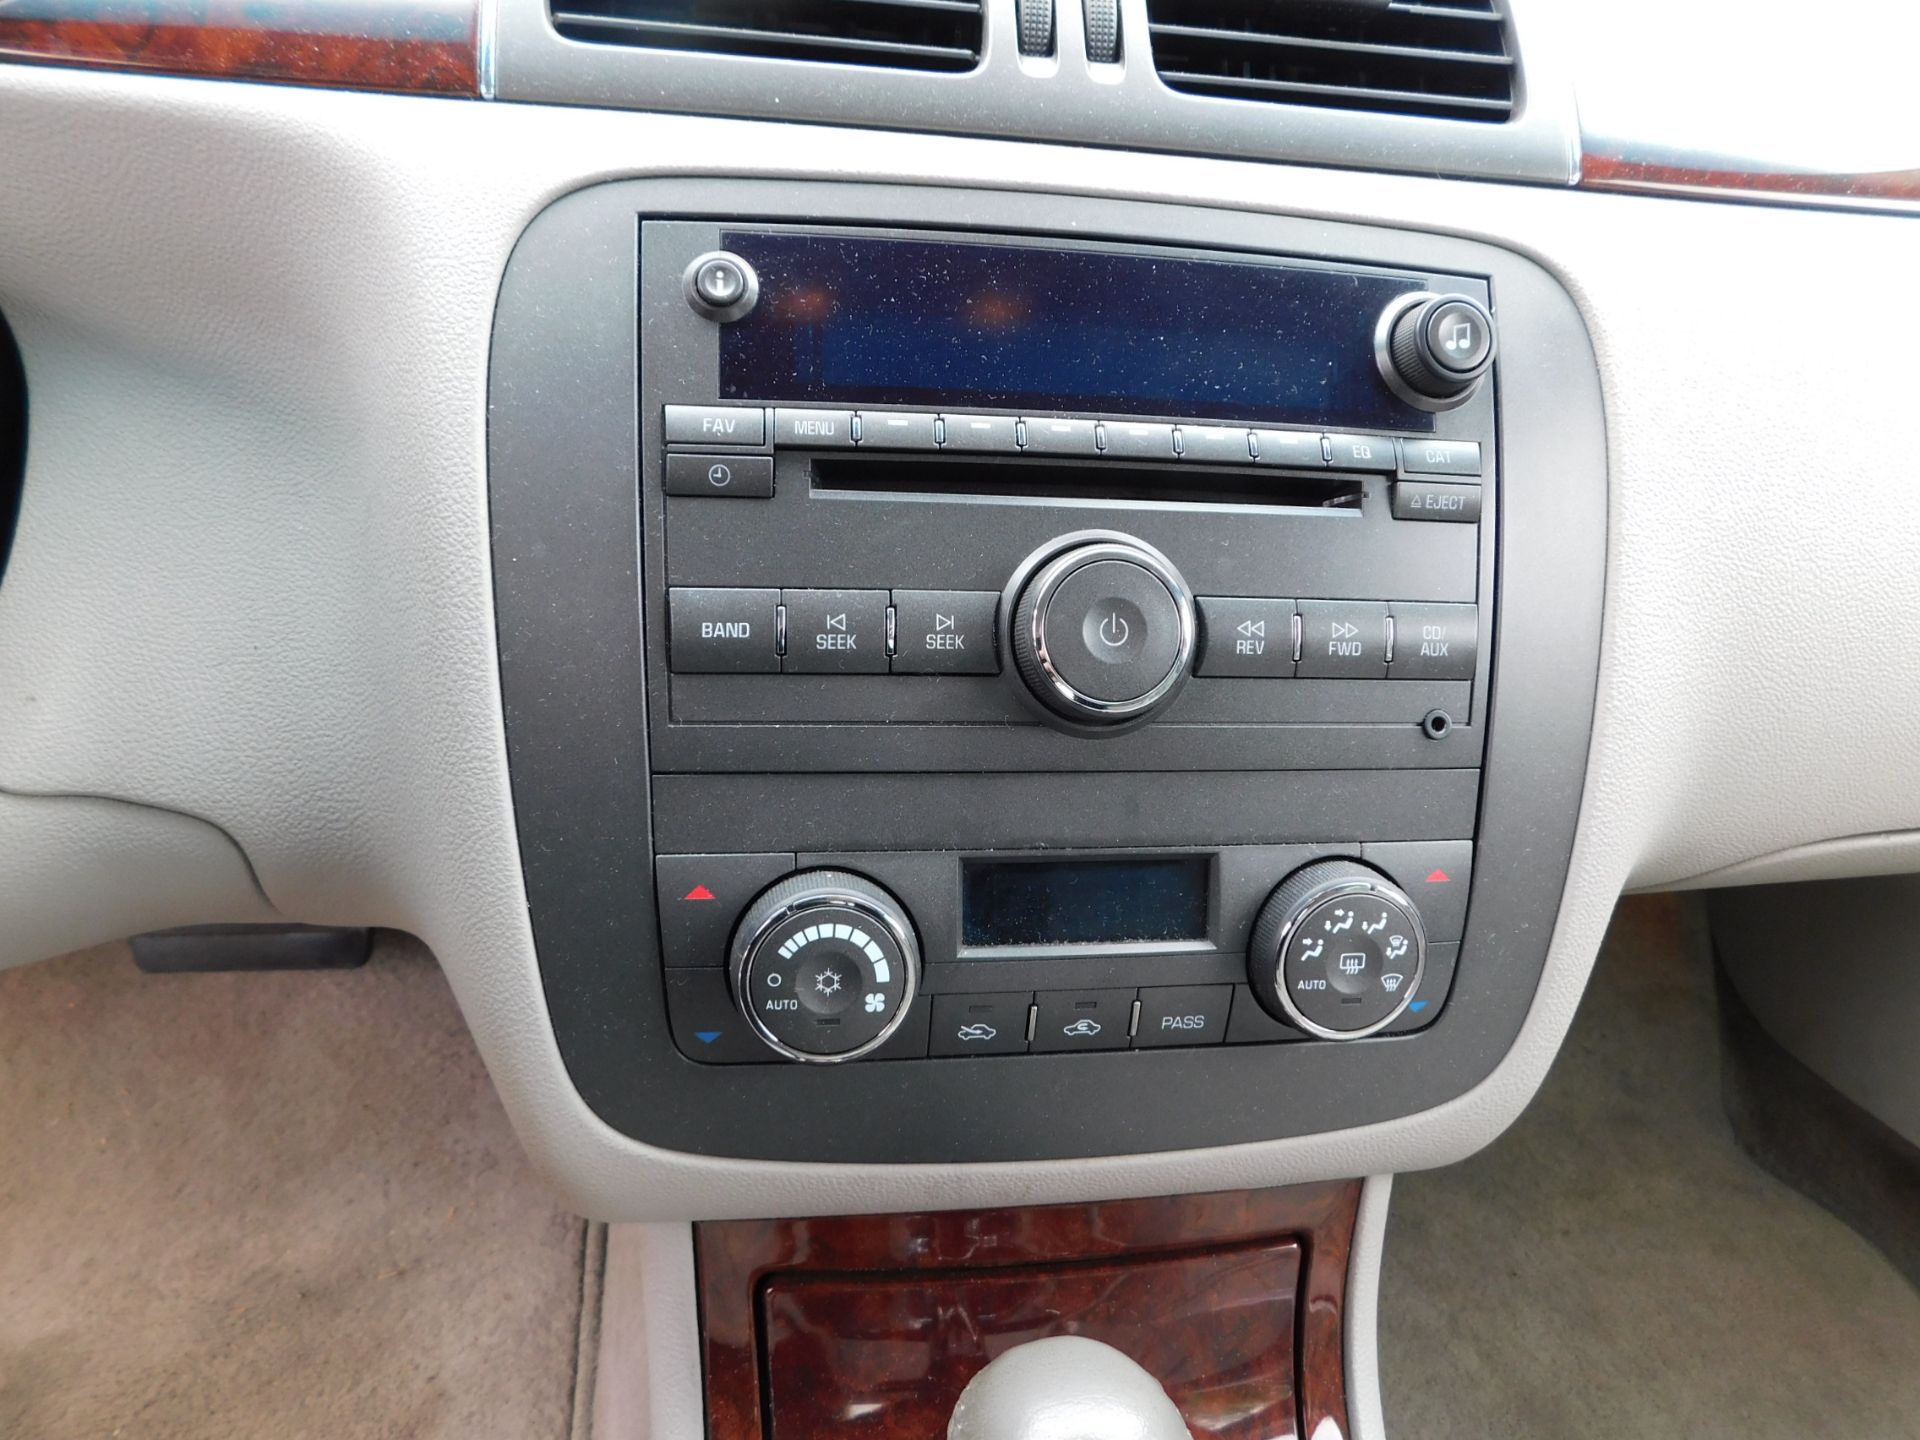 2007 Buick Lucerne CXL 4-Door Sedan, VIN 1G4HD57287U226782, Leather, Heated Seats, Automatic, PW, - Image 21 of 22